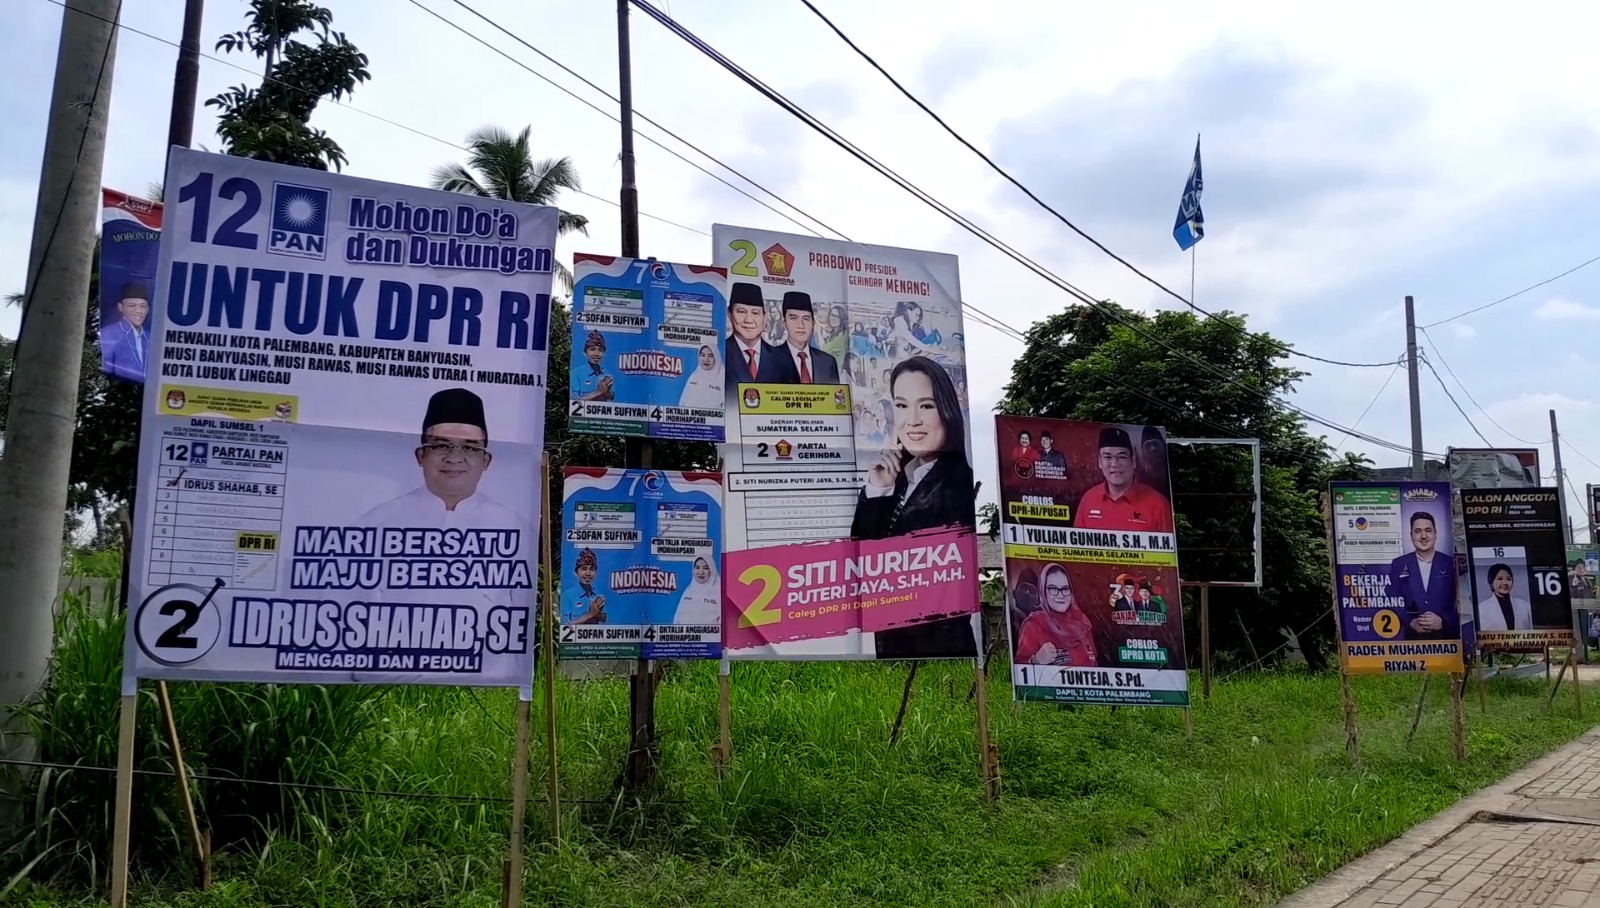 Satpol PP Kota Palembang Tertibkan APK yang Terpasang di Jalan Protokol Palembang 